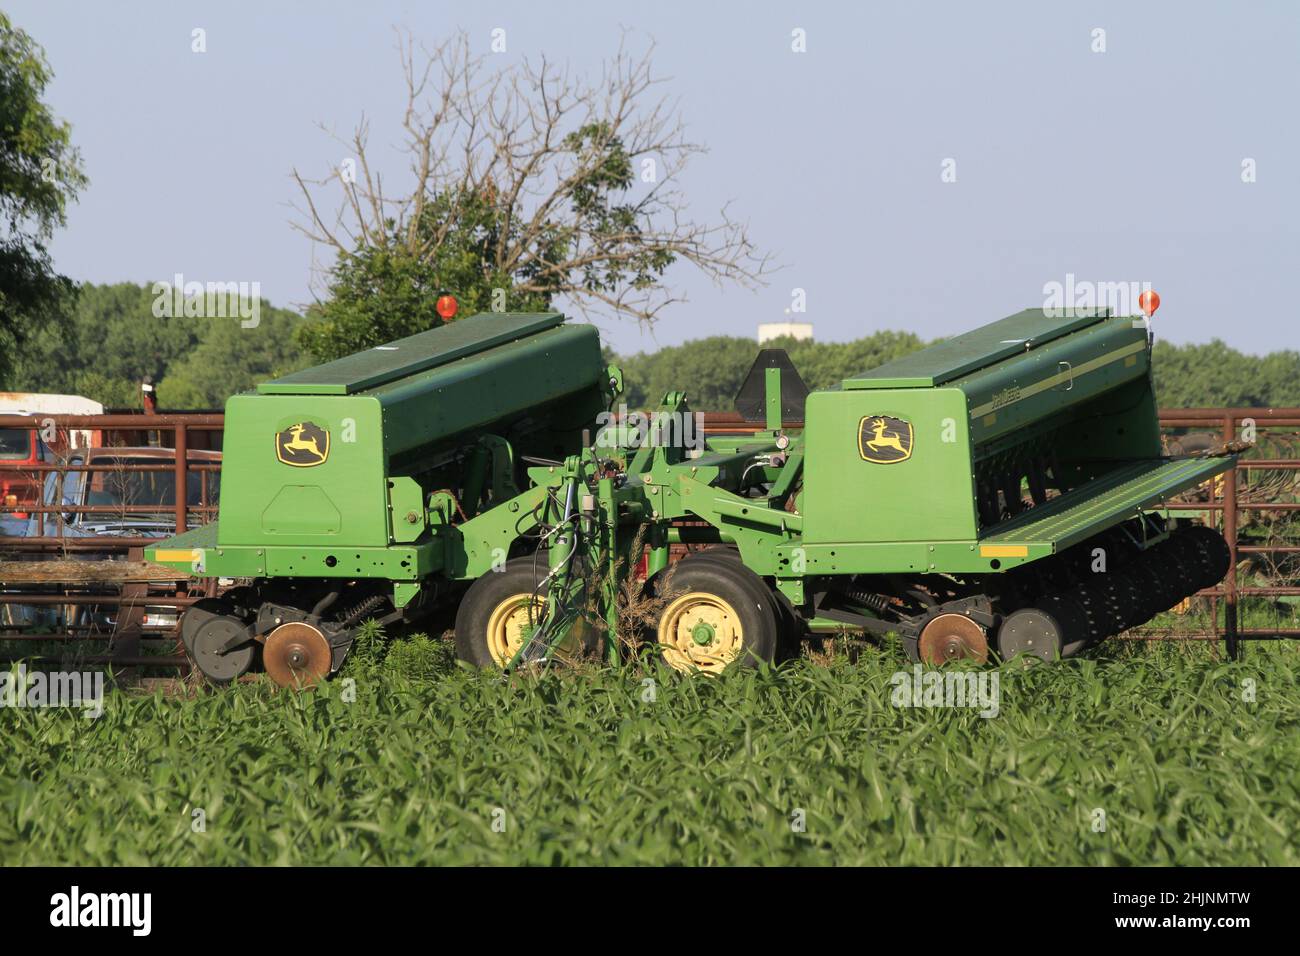 Sembradoras John Deere con cielo azul y campo verde Foto de stock